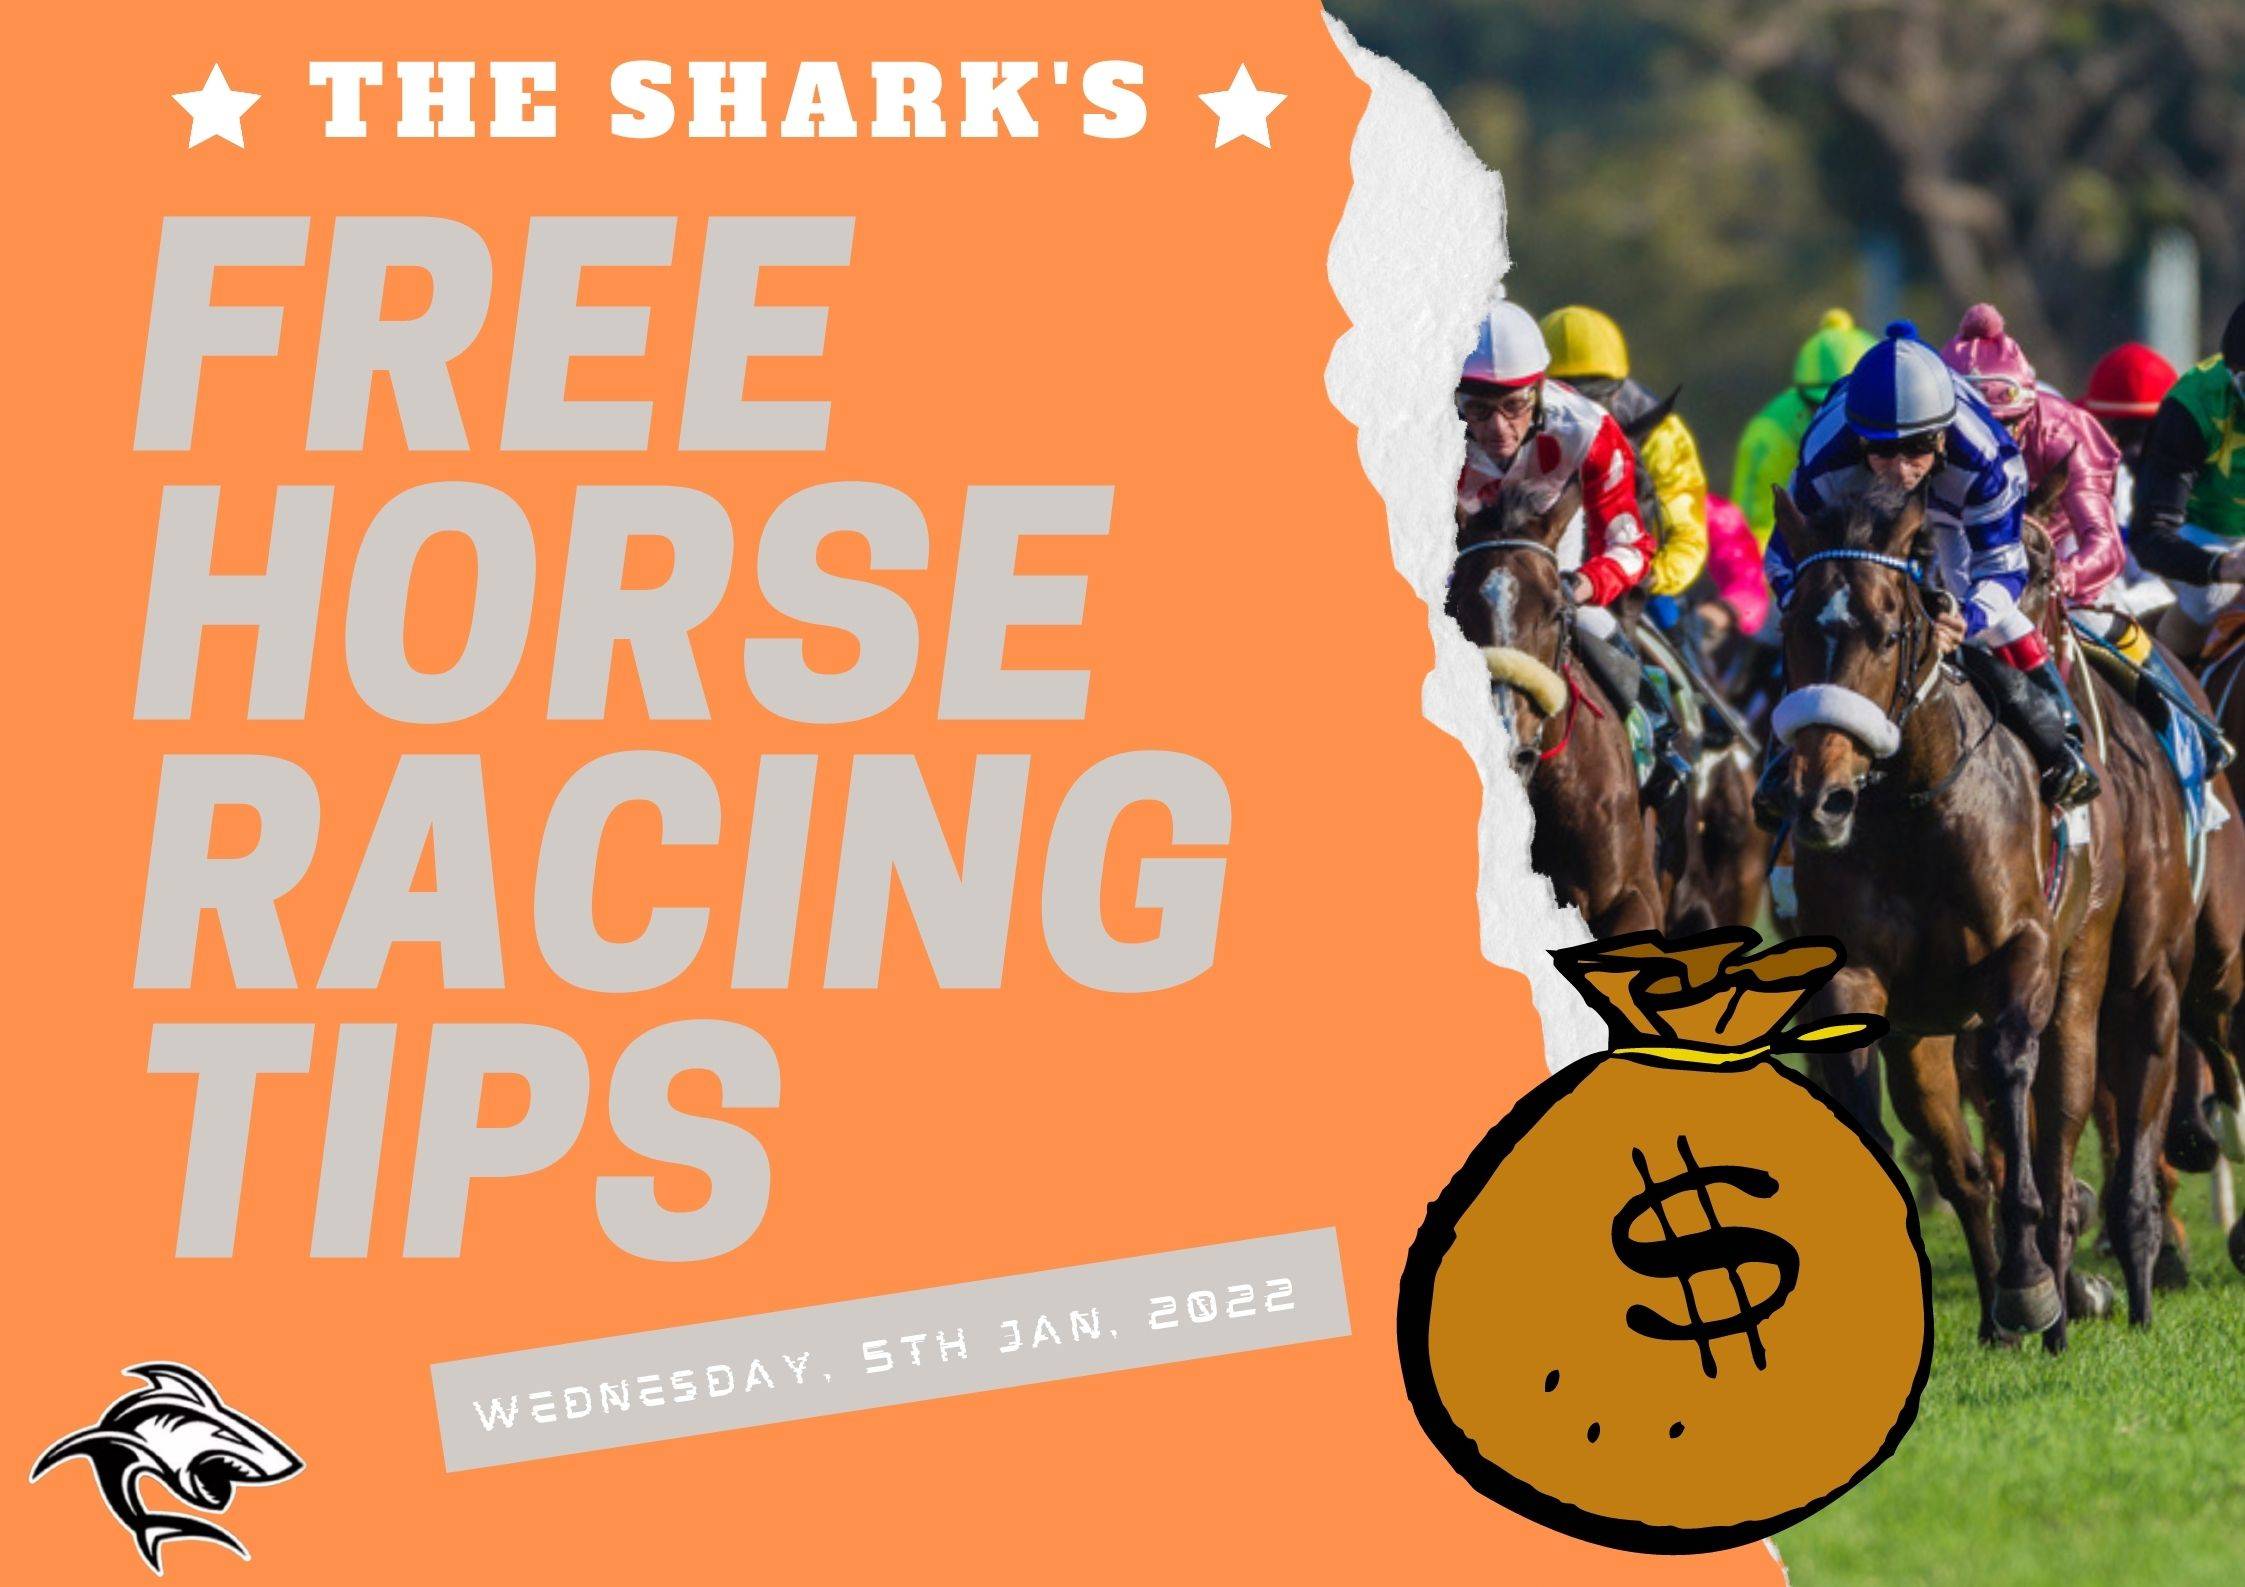 Free Horse Racing Tips - 5th Jan